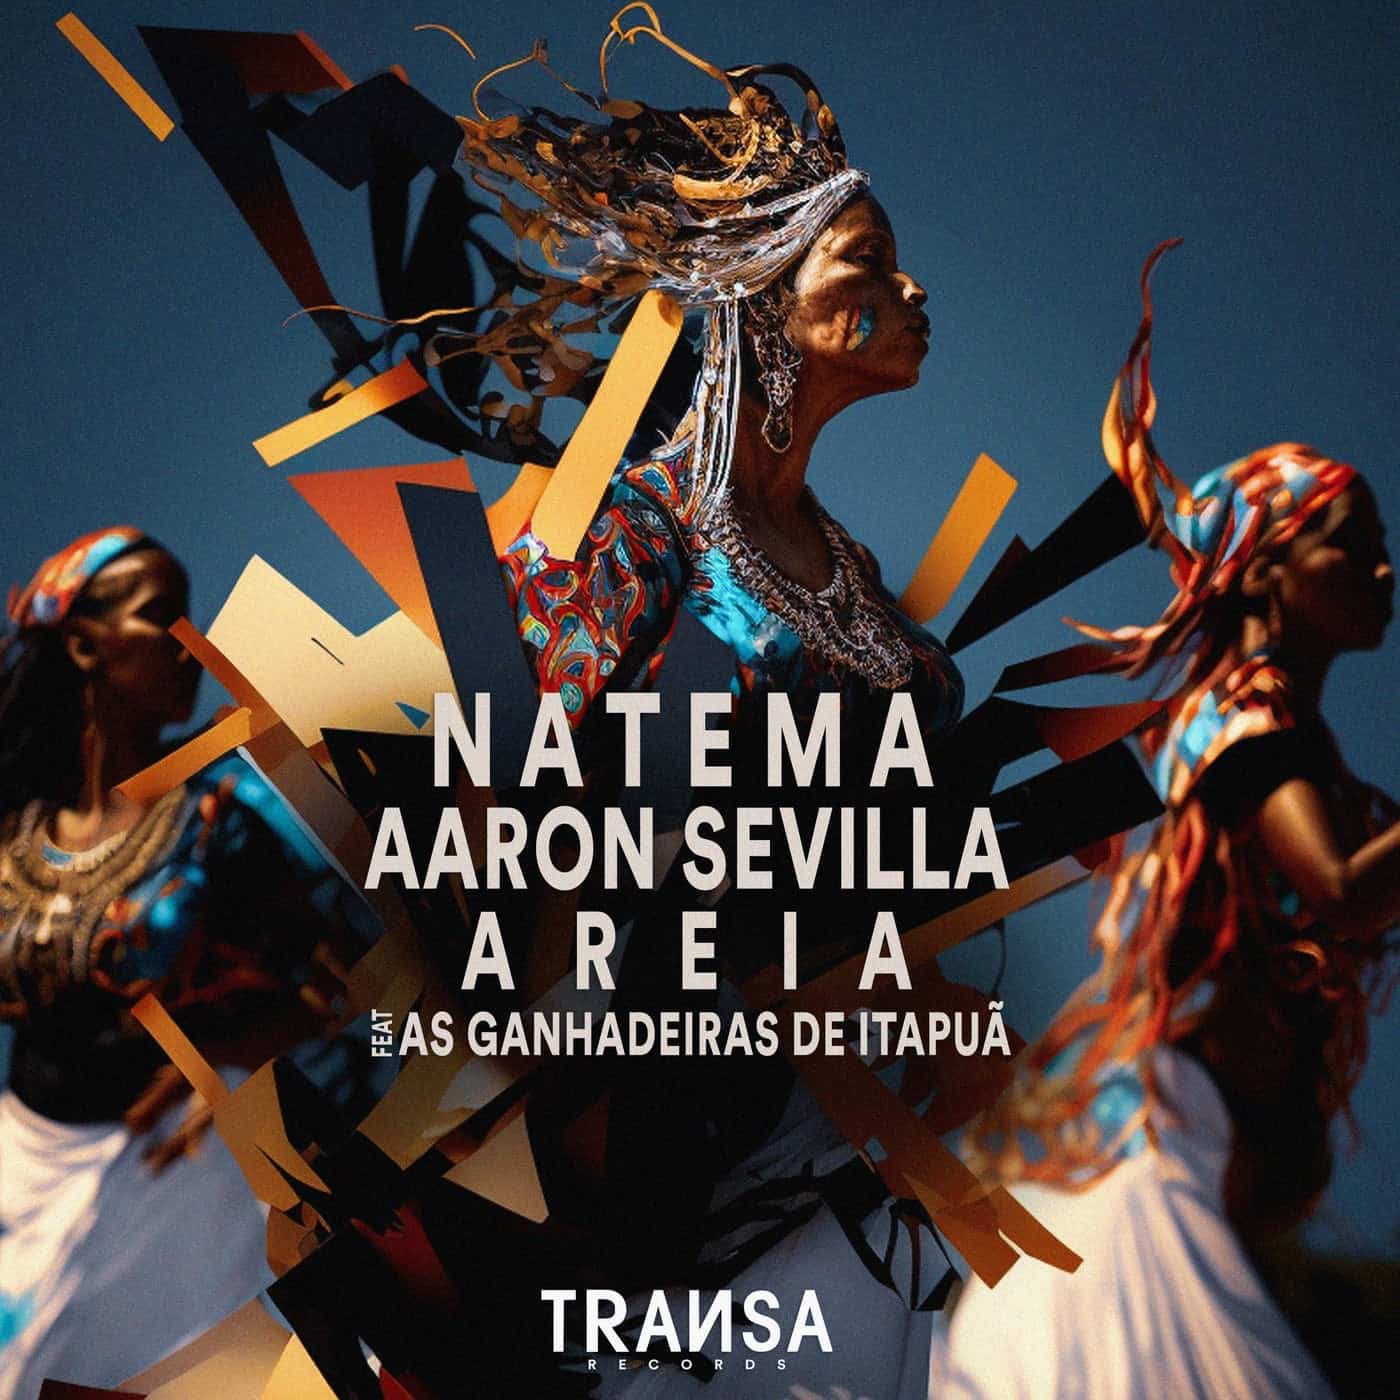 Download Natema, Aaron Sevilla, As Ganhadeiras de Itapuã - Areia feat As Ganhadeiras de Itapuã on Electrobuzz